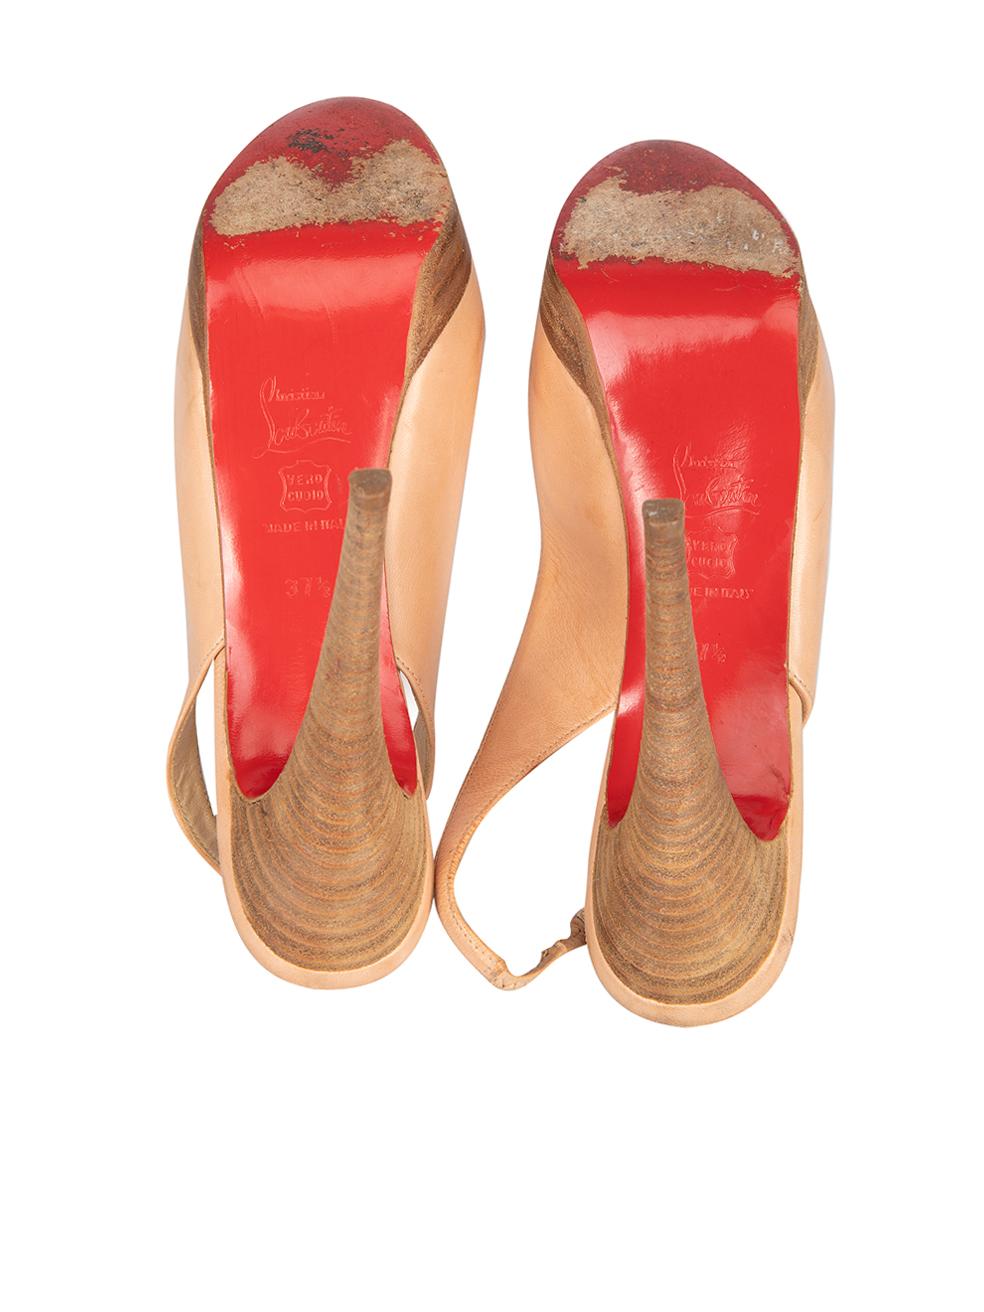 Christian Louboutin Women's Pink Leather Peep Toe Slingback Heels 4